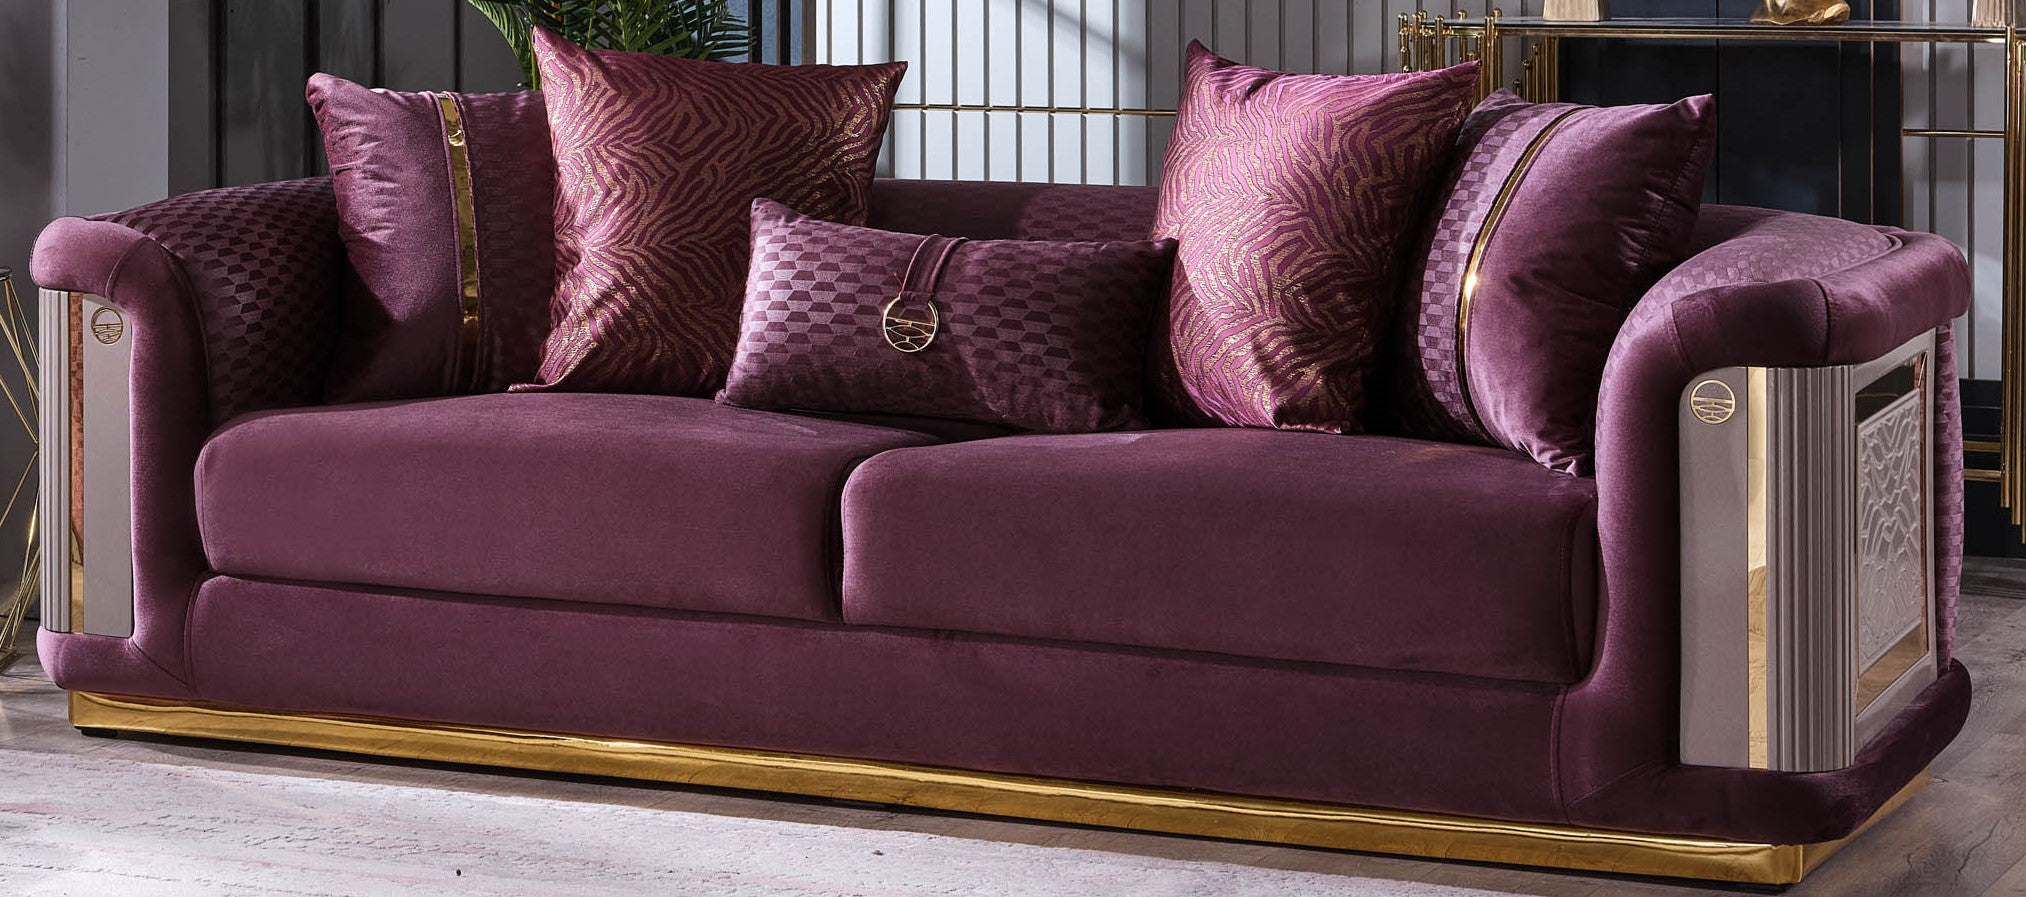 Elegance Stationary Sofa Purple